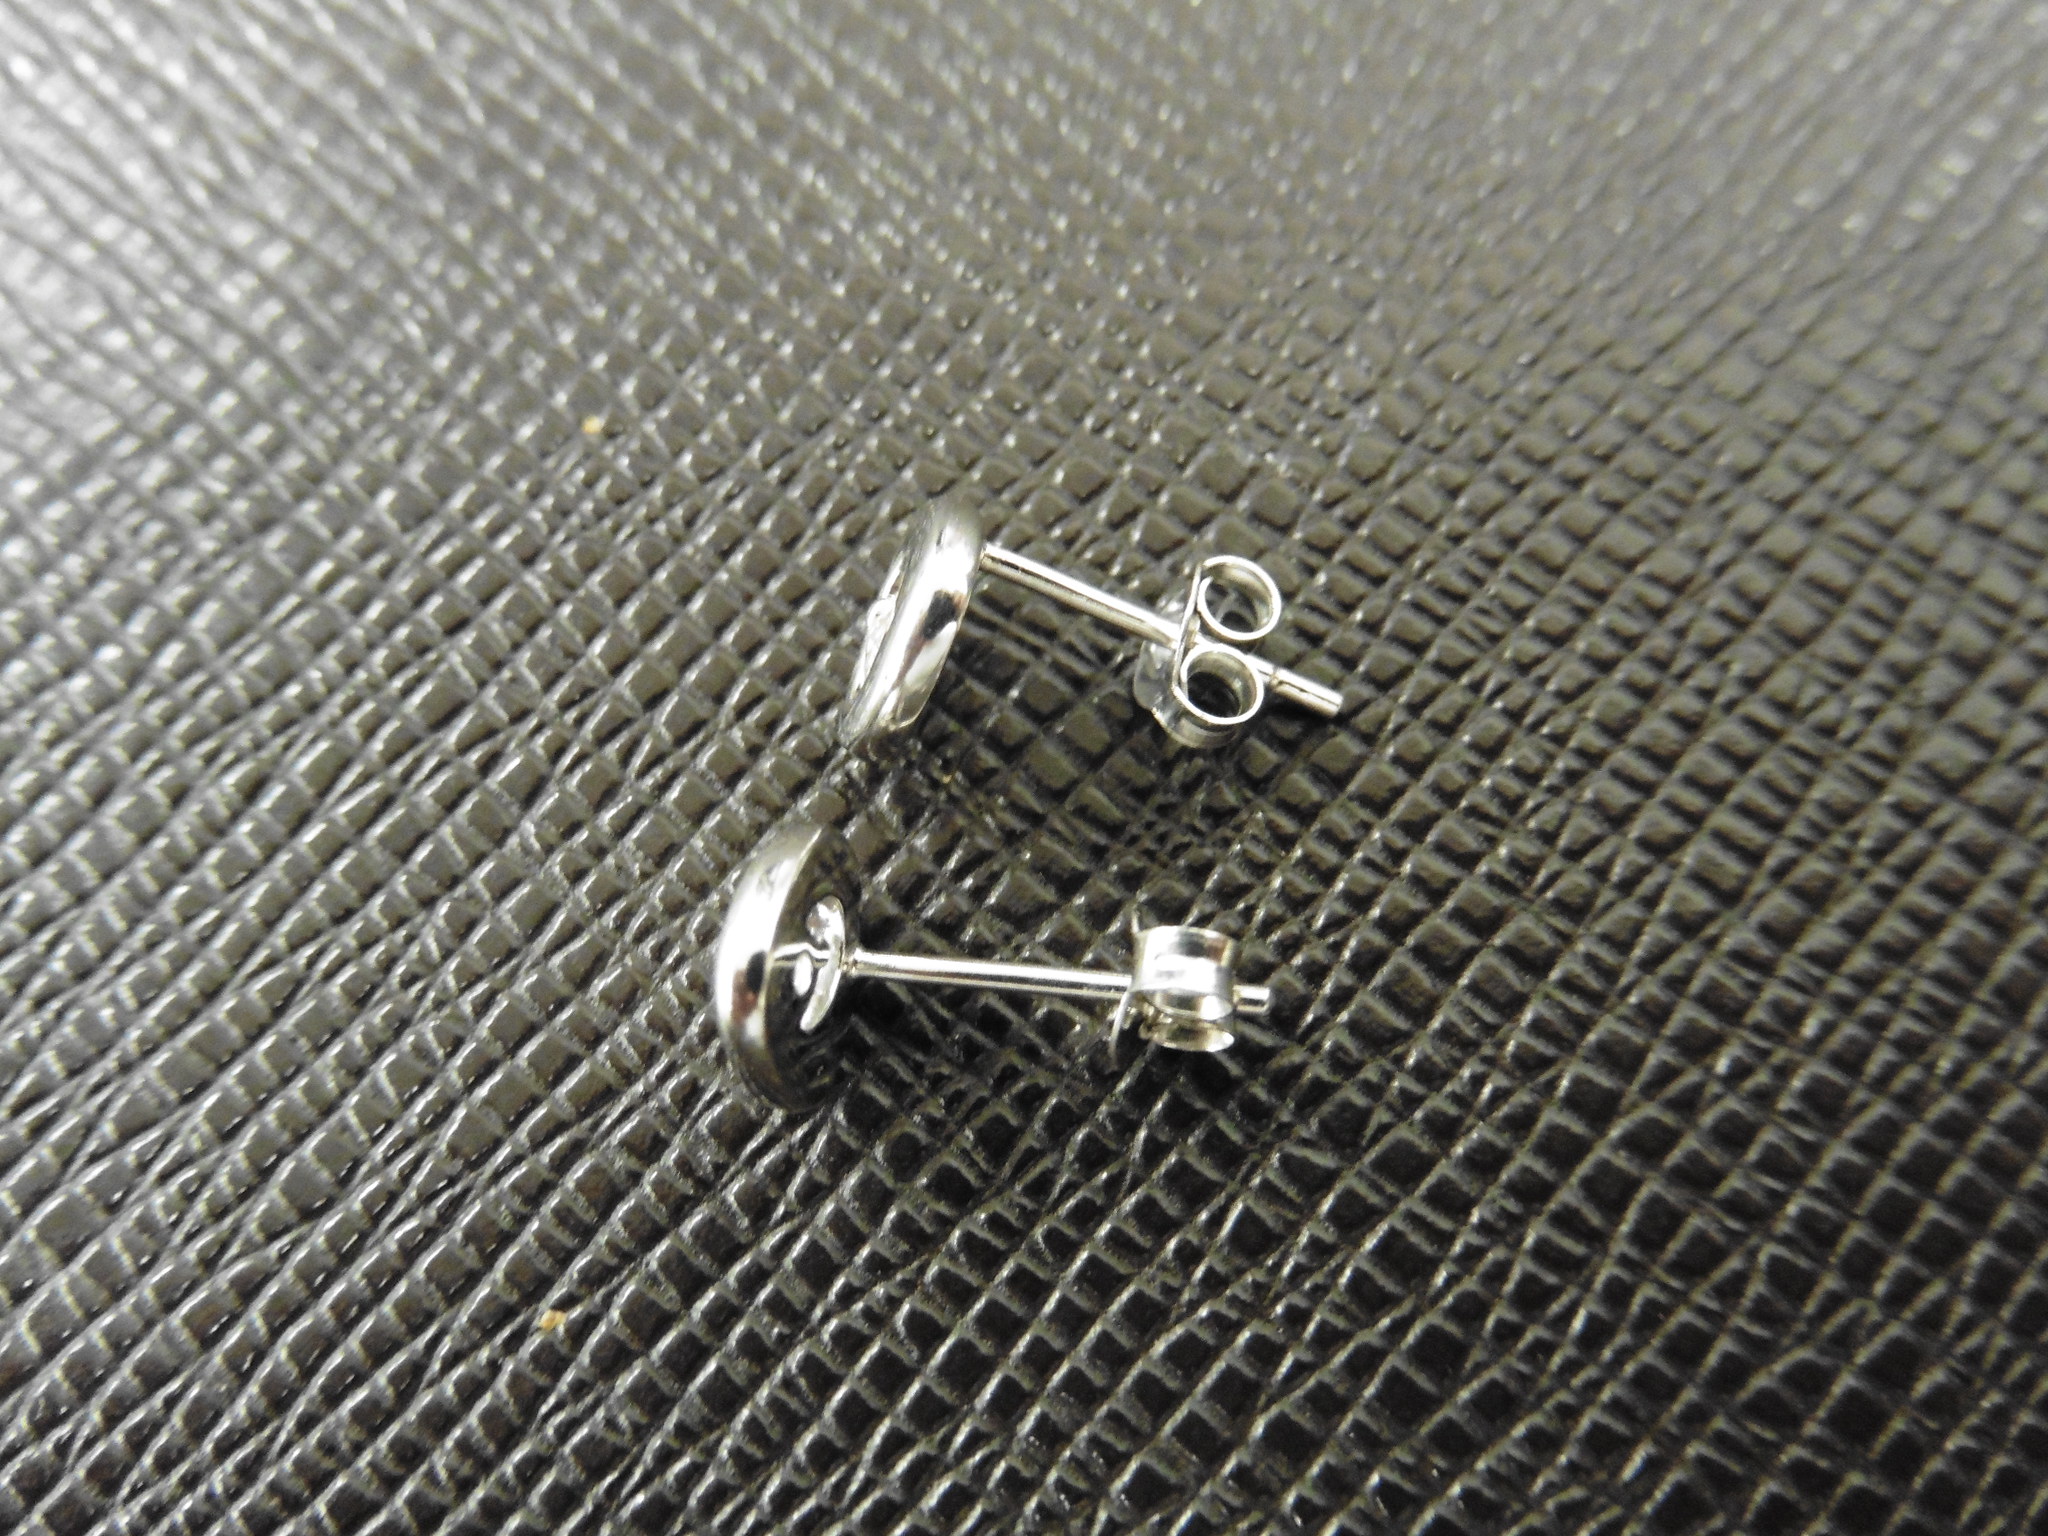 0.12ct diamond earrings set in platinum 950. 2 small brilliant cut diamonds, H/I colourand si2 - Image 2 of 3